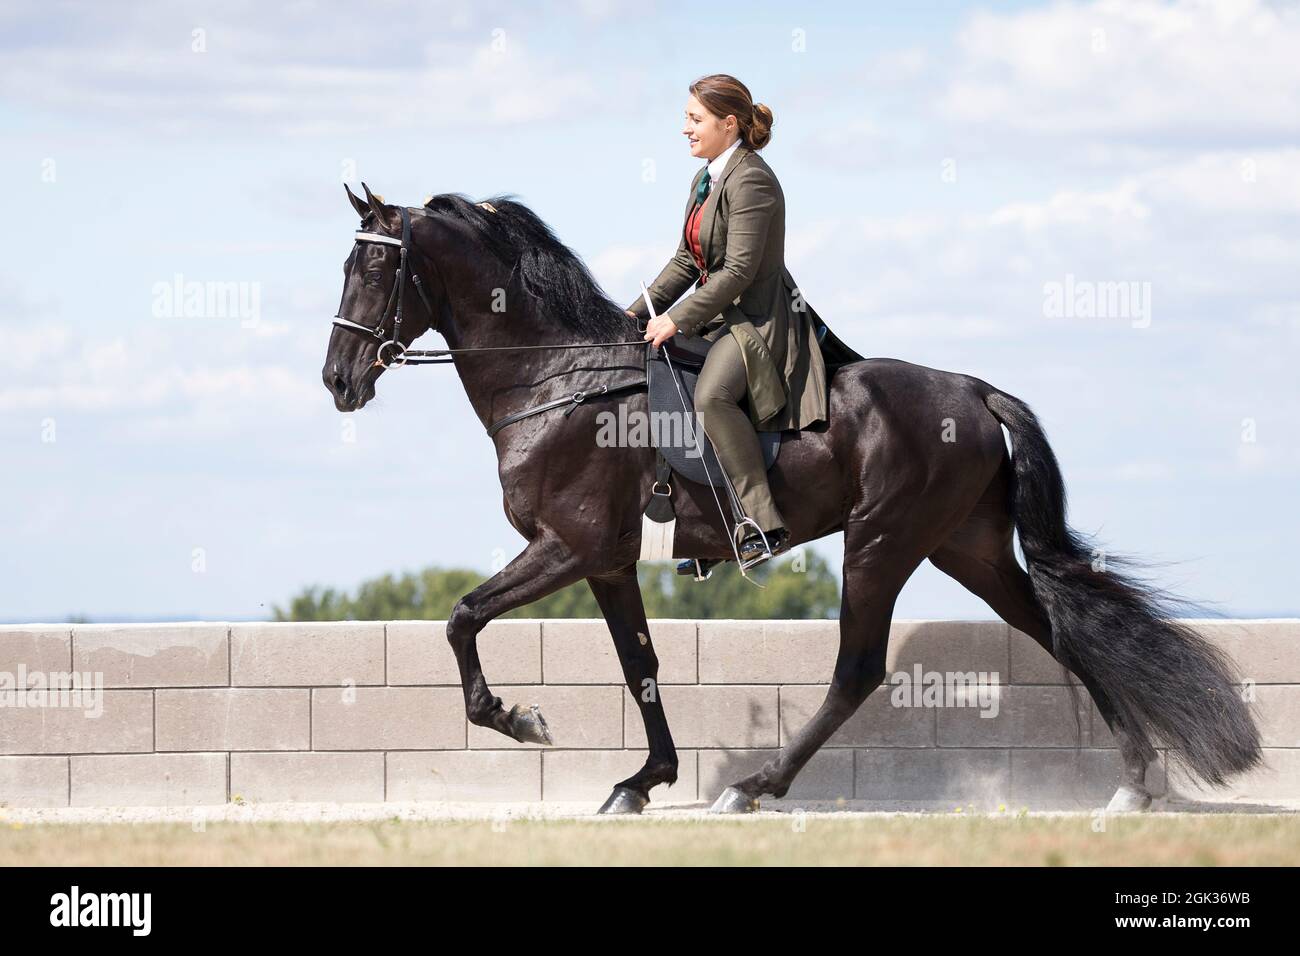 Tennessee Walking Horse. Un jinete en un semental negro que realiza una carrera a pie. Alemania Foto de stock